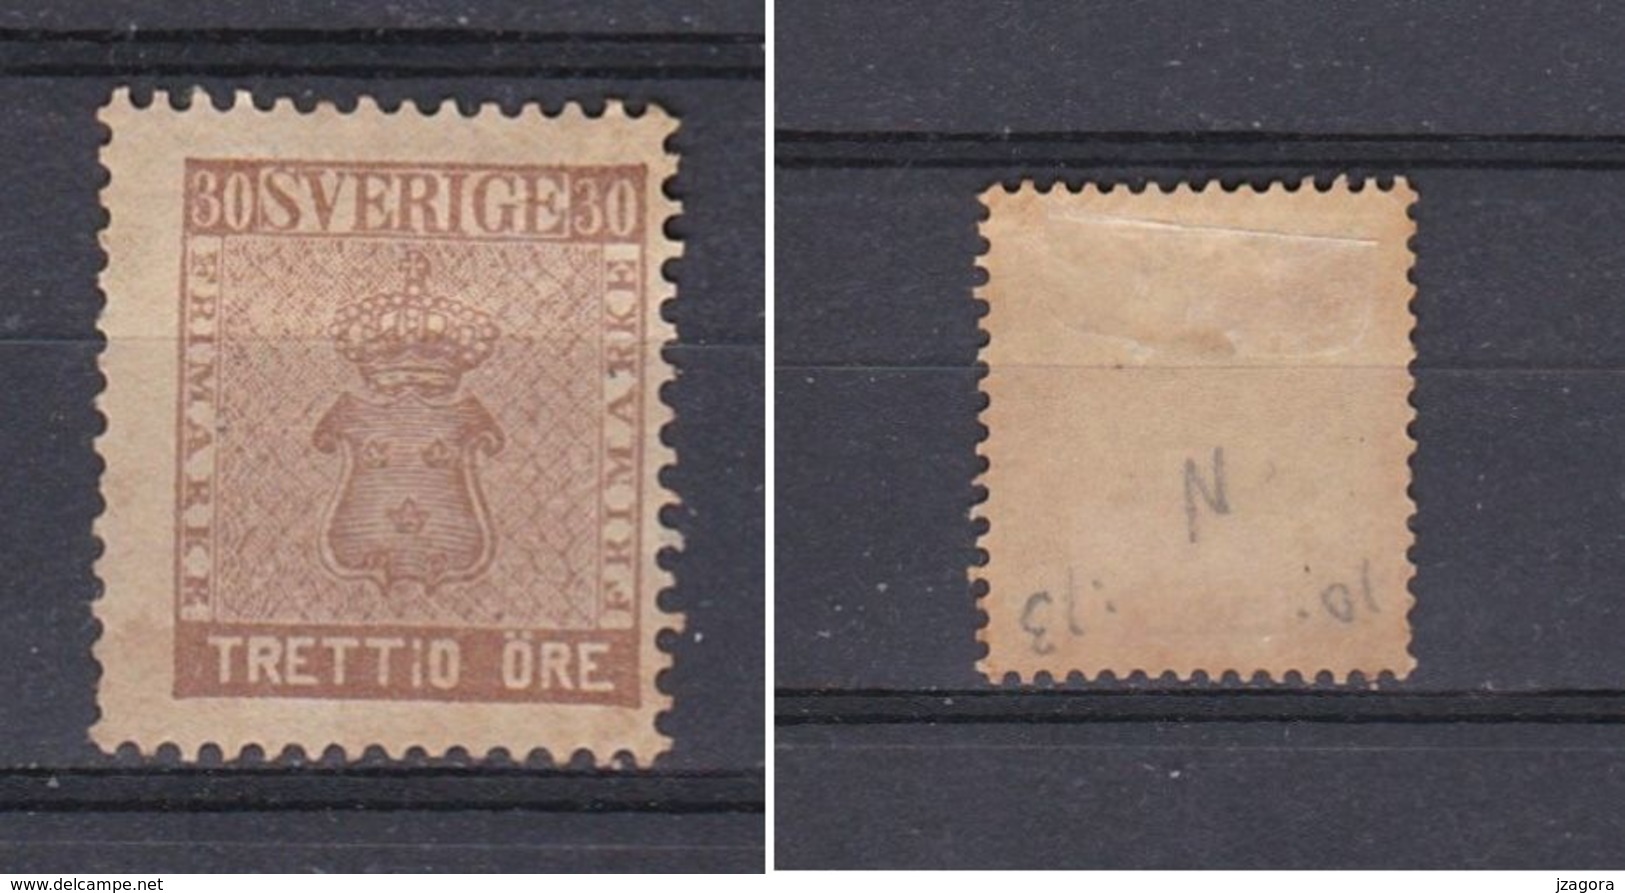 SWEDEN SCHWEDEN SUEDE 1858 30 ORE Mi 11 MH (*)  K13 ISSUE 1885 - Unused Stamps